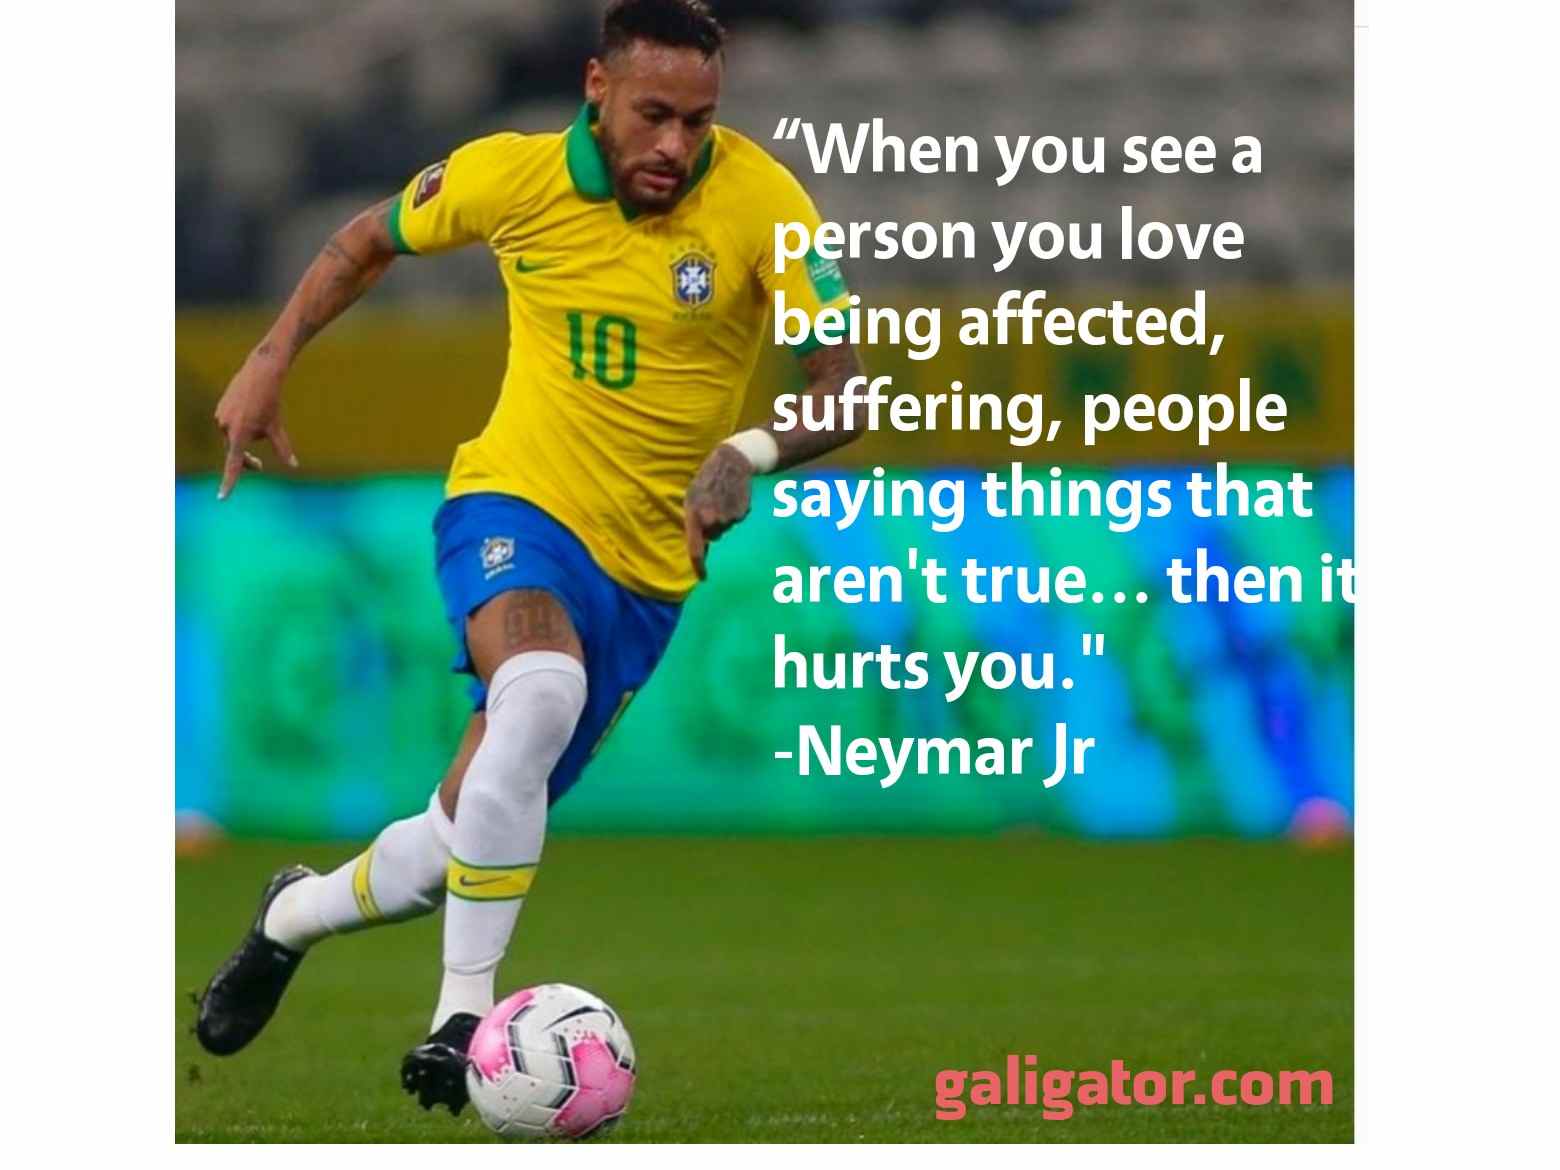  neymar quotes ,neymar inspirational quotes,neymar thoughts,neymar status,football quotes for whatsapp,neymar jr quotes